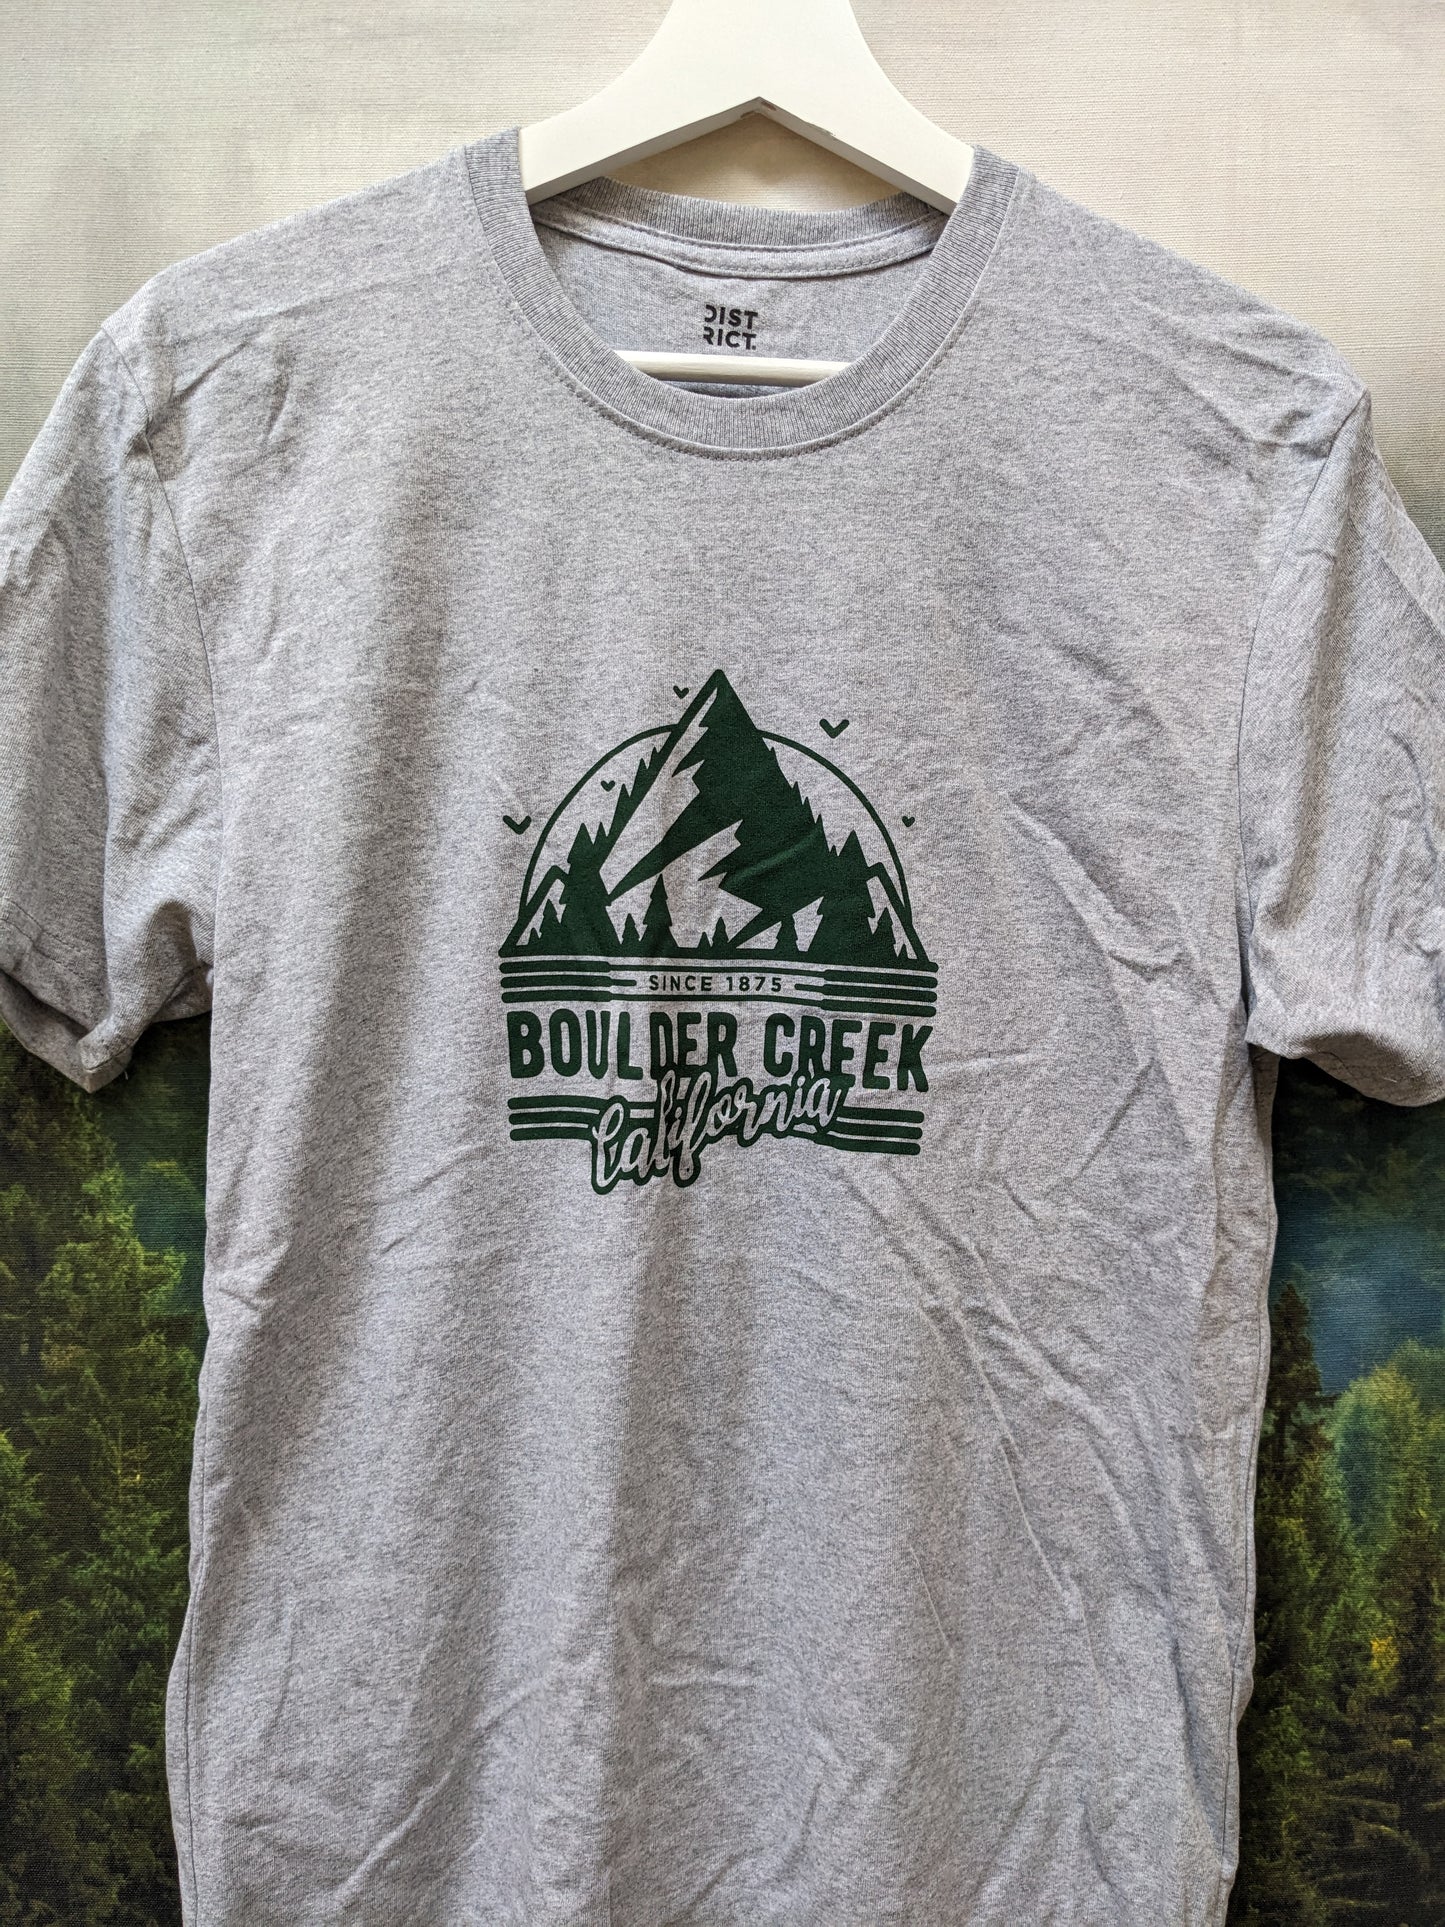 Gray t-shirt with dark green Boulder Creek graphic